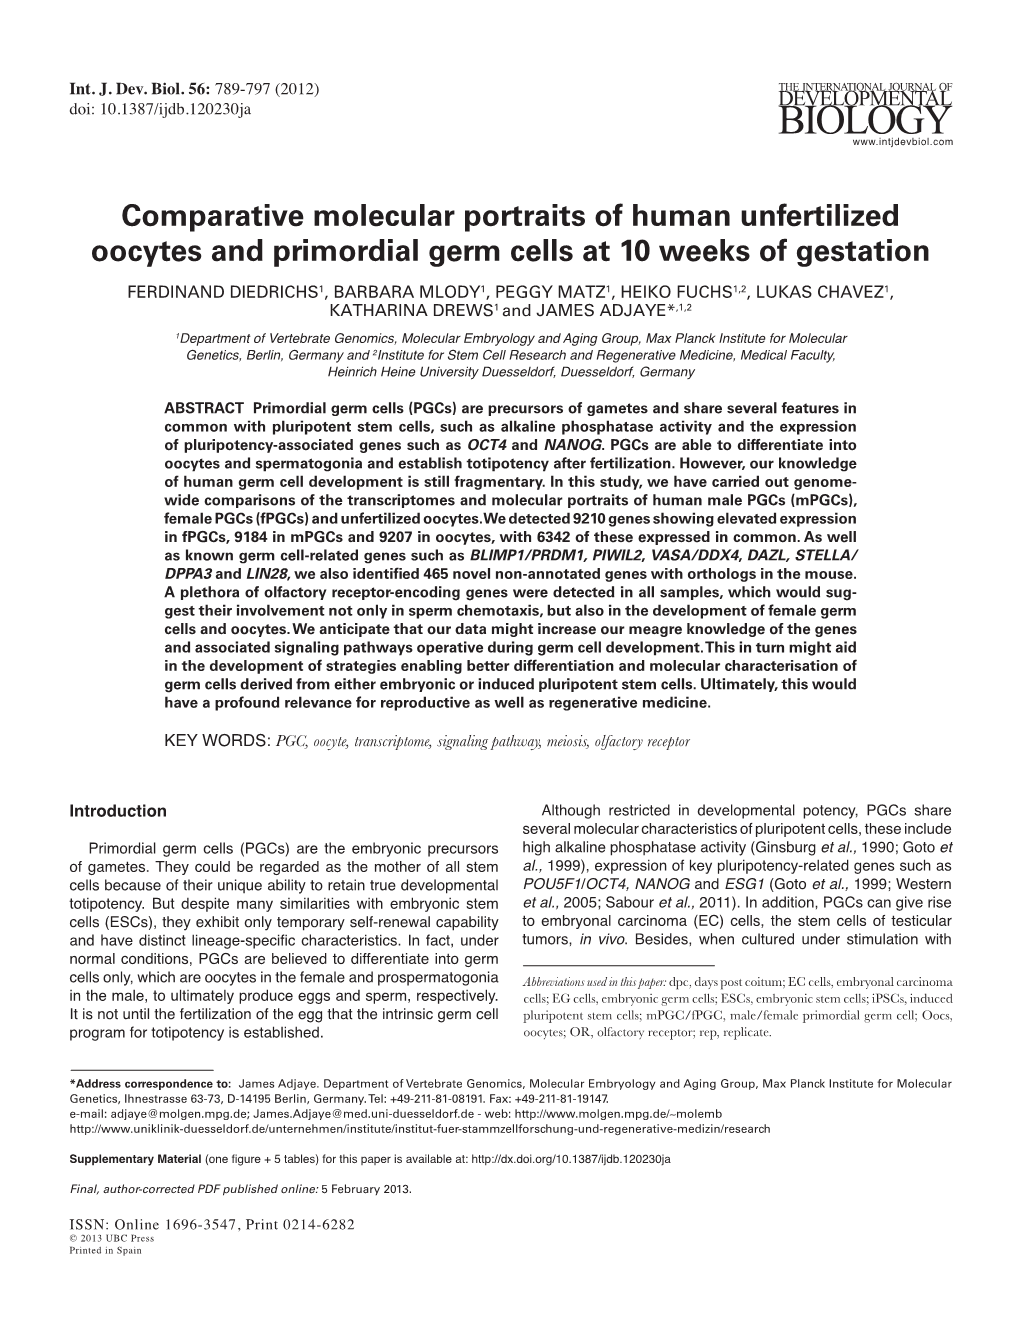 Comparative Molecular Portraits of Human Unfertilized Oocytes And